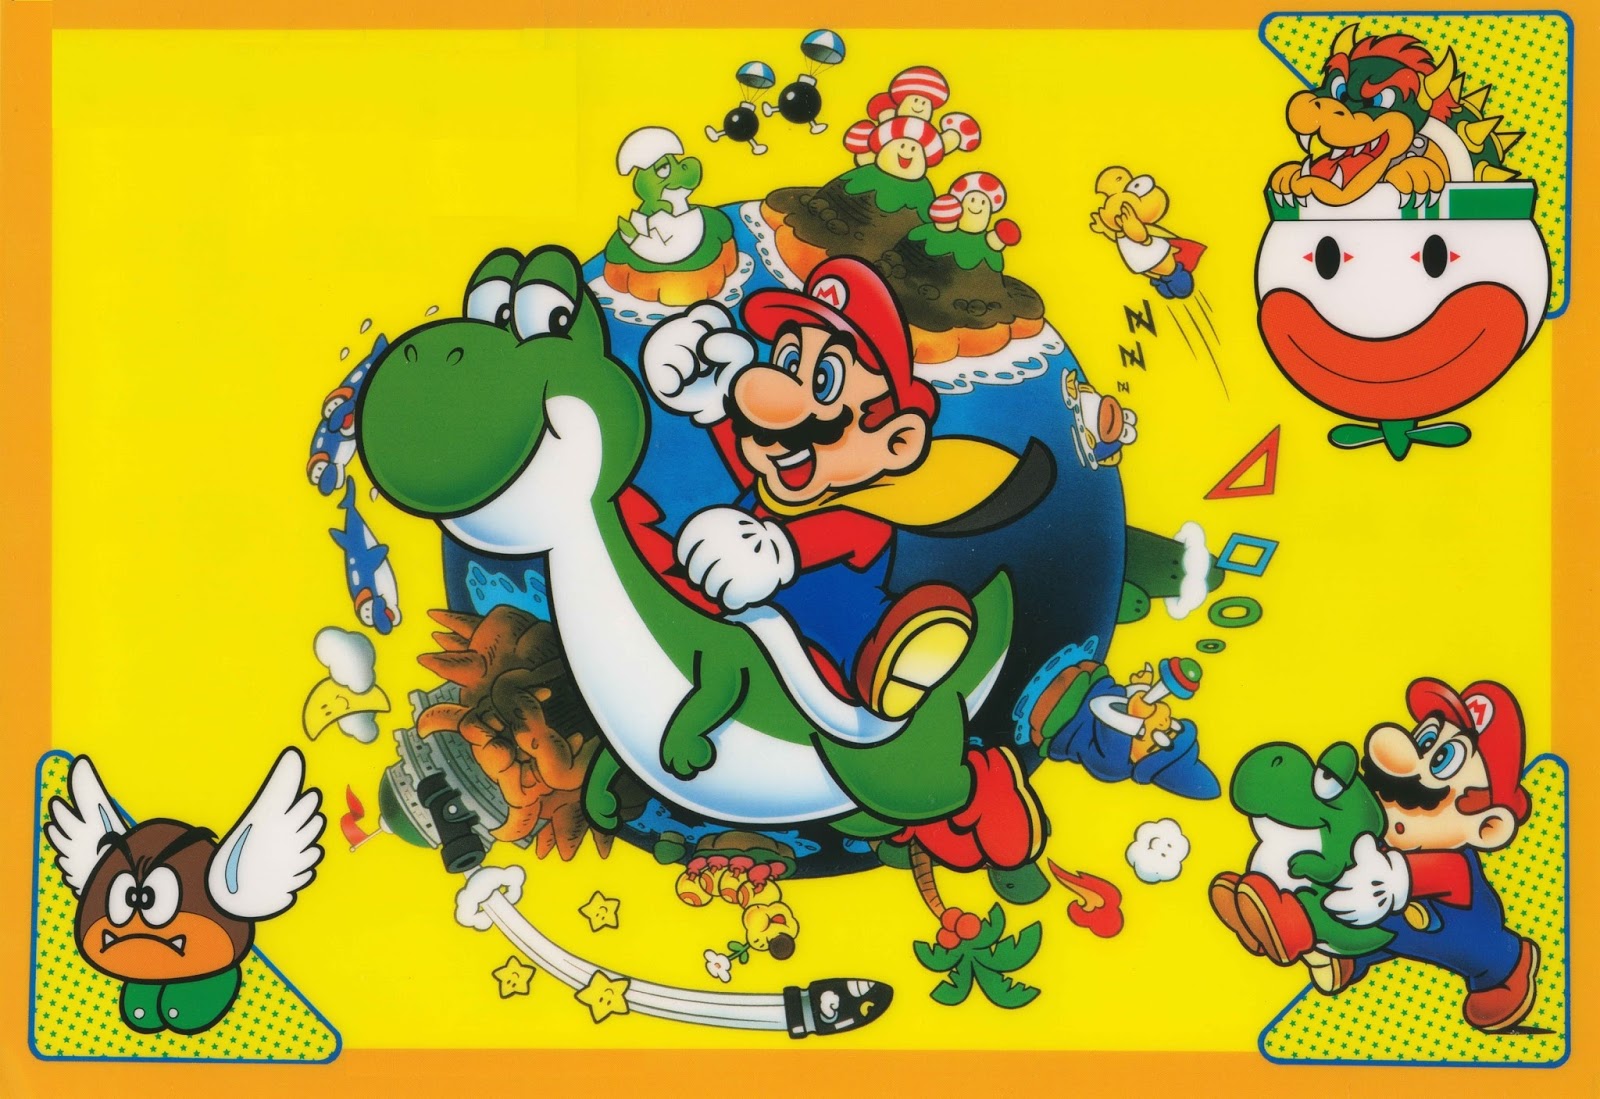 Os jogos preferidos de Super Nintendo — Gilson Peres - Nintendo Blast